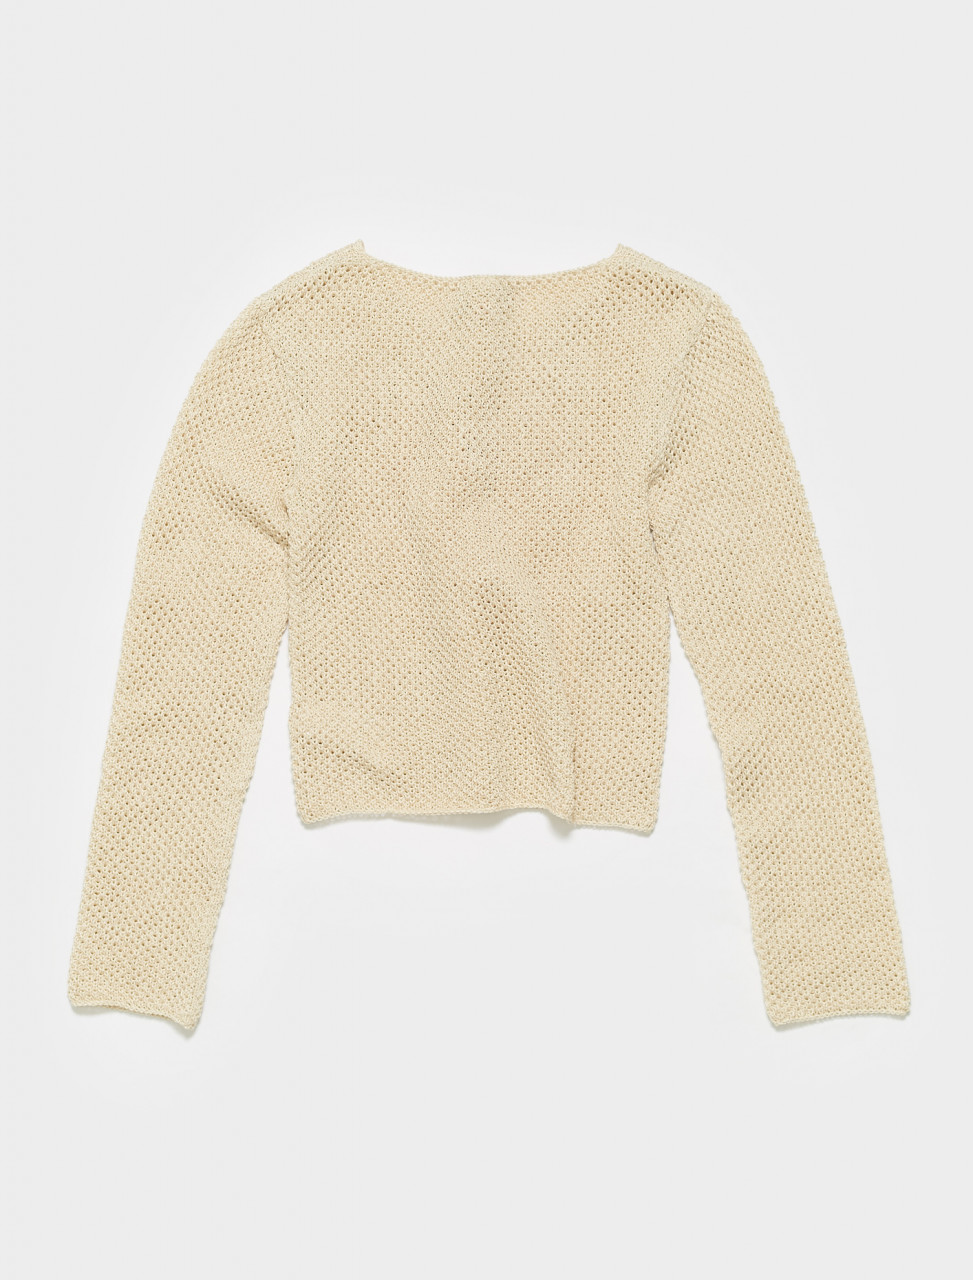 Eckhaus Latta Doily Sweater in Cream | Voo Store Berlin | Worldwide ...